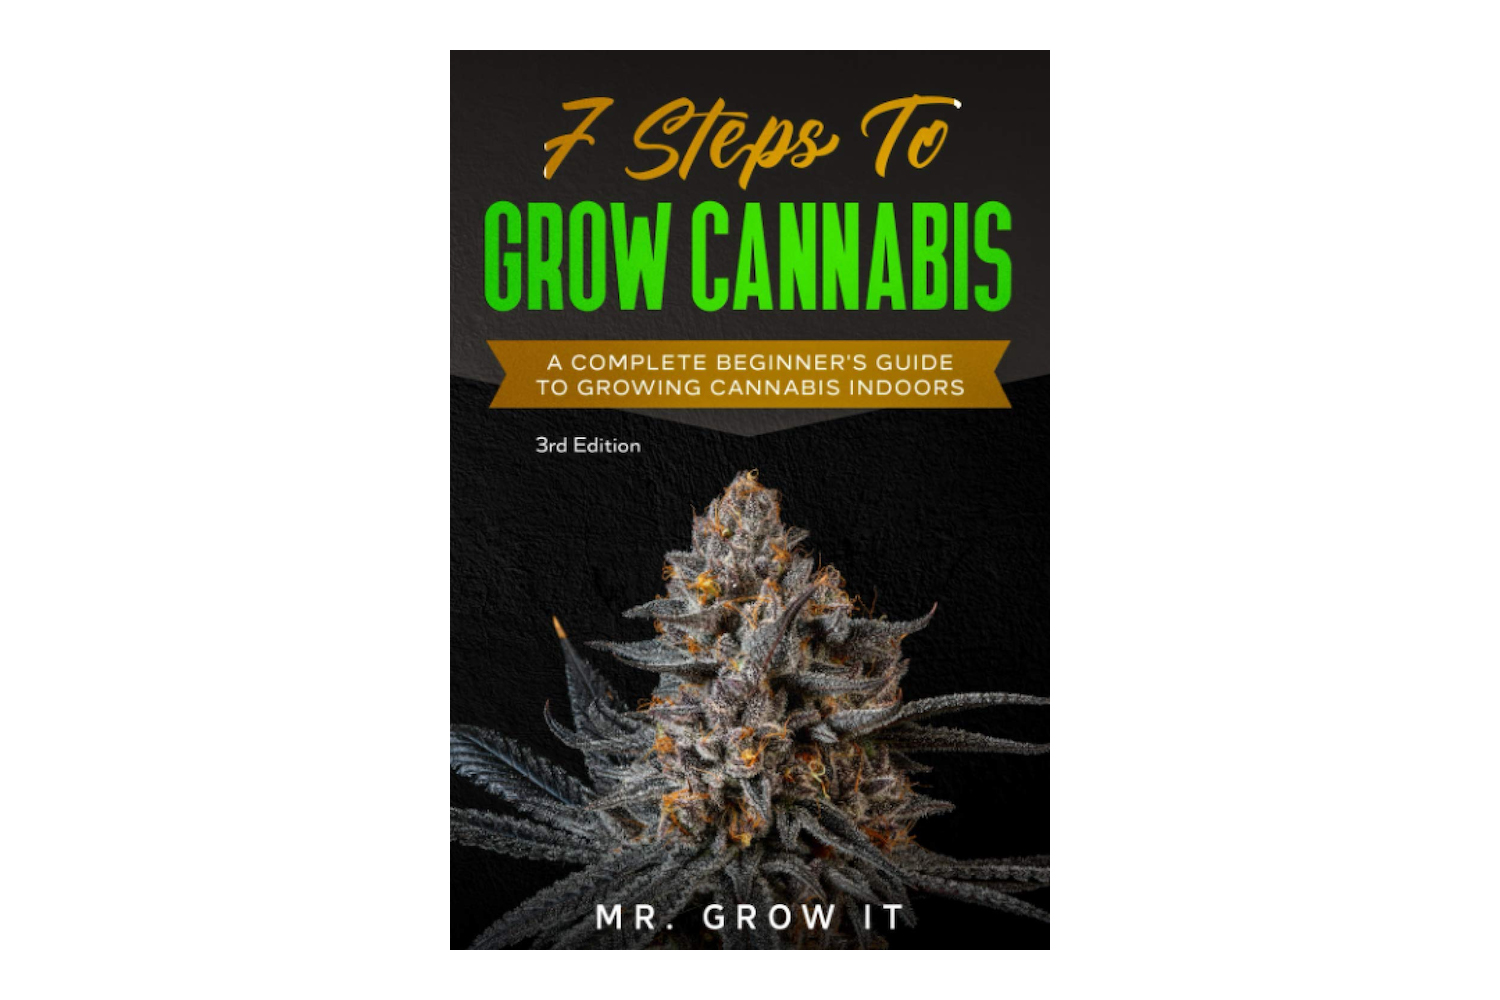 the cannabis grow bible 4th edition